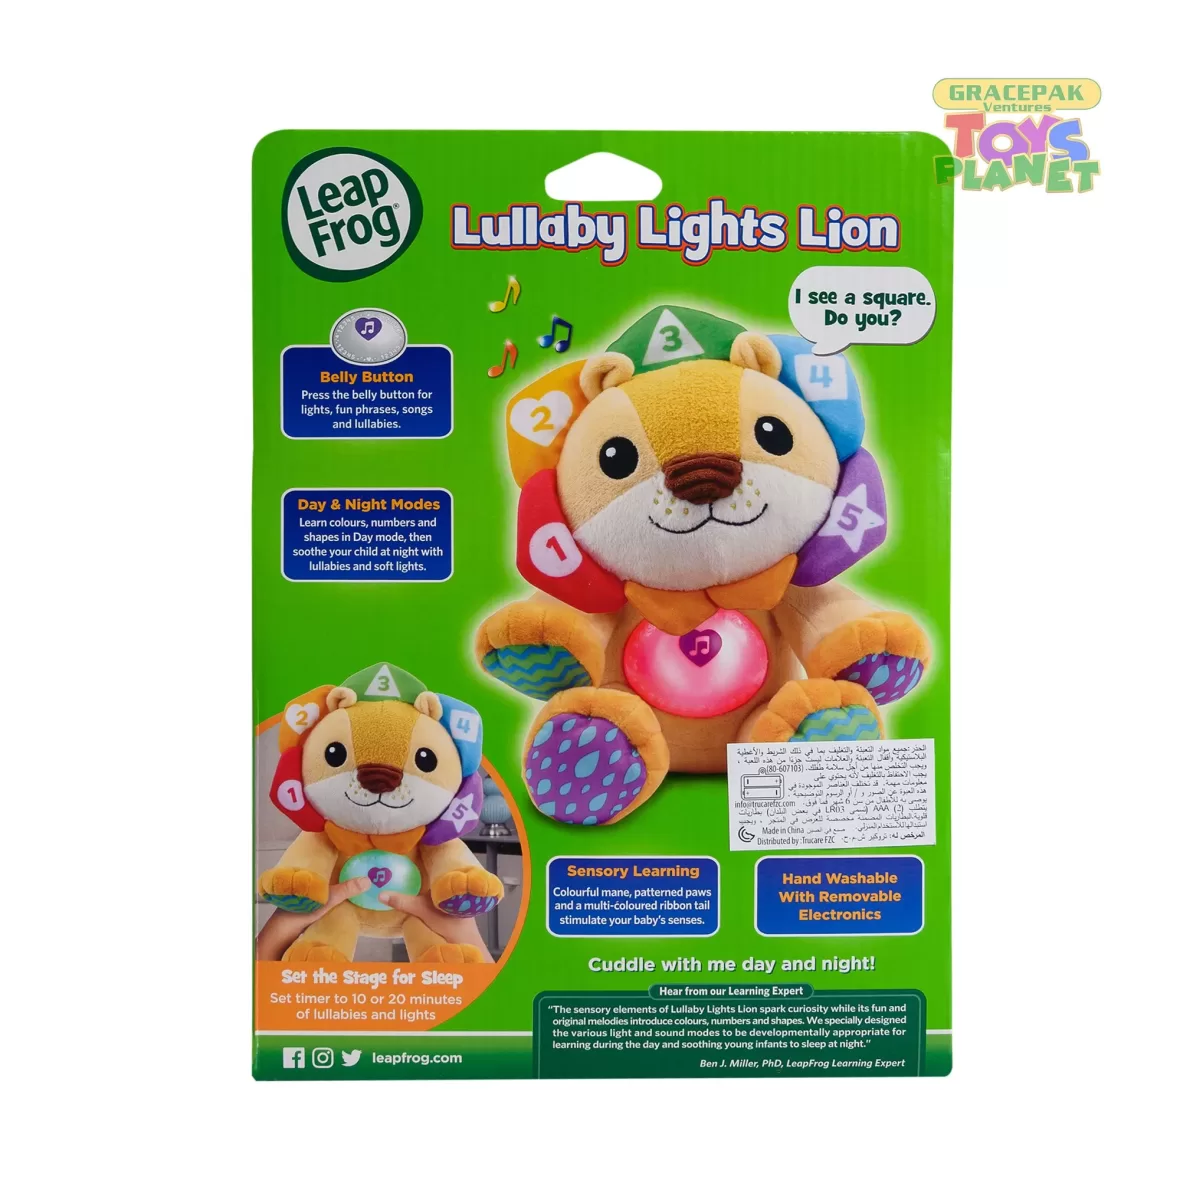 Leapfrog_Lullaby Lights Lion_3